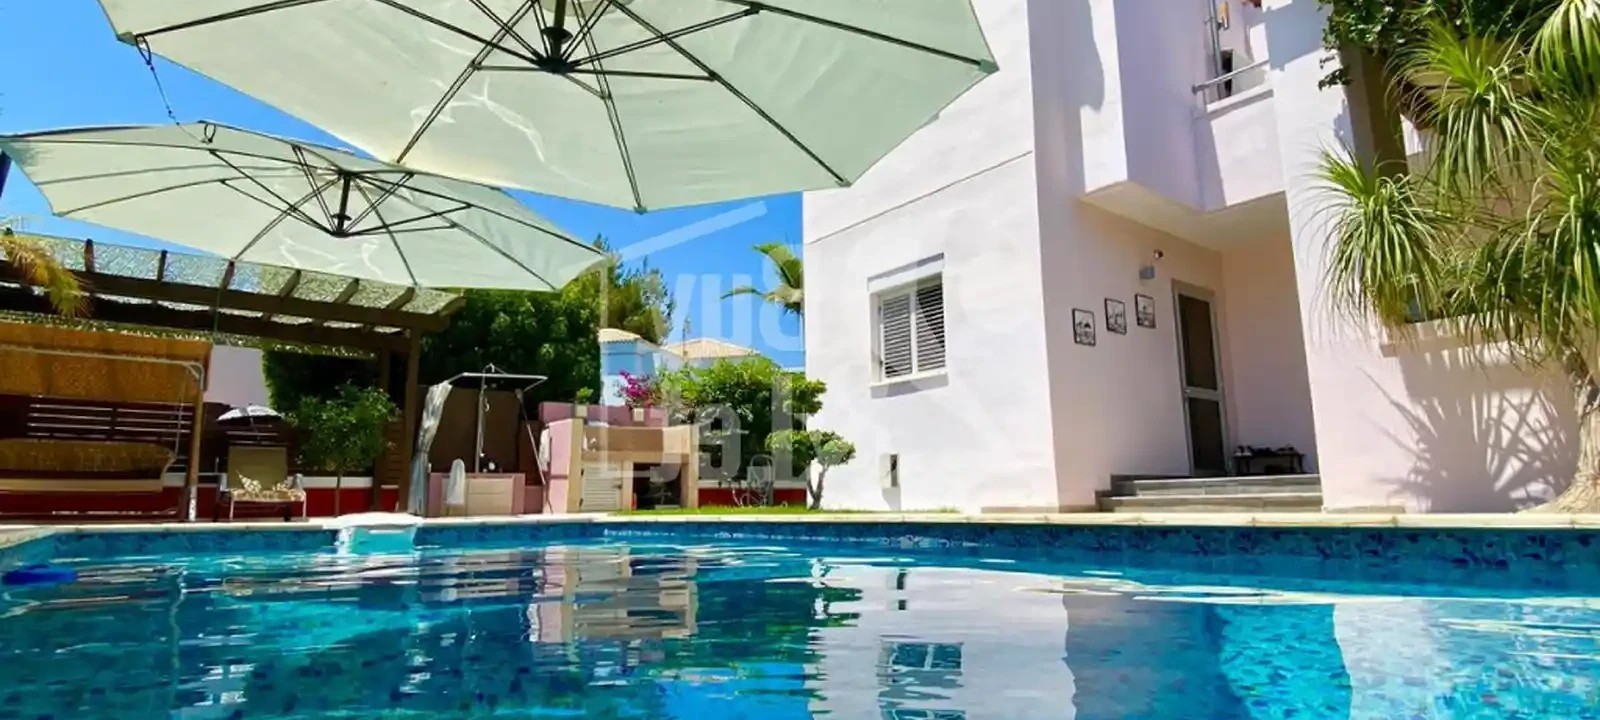 3-bedroom villa fоr sаle €1.280.000, image 1